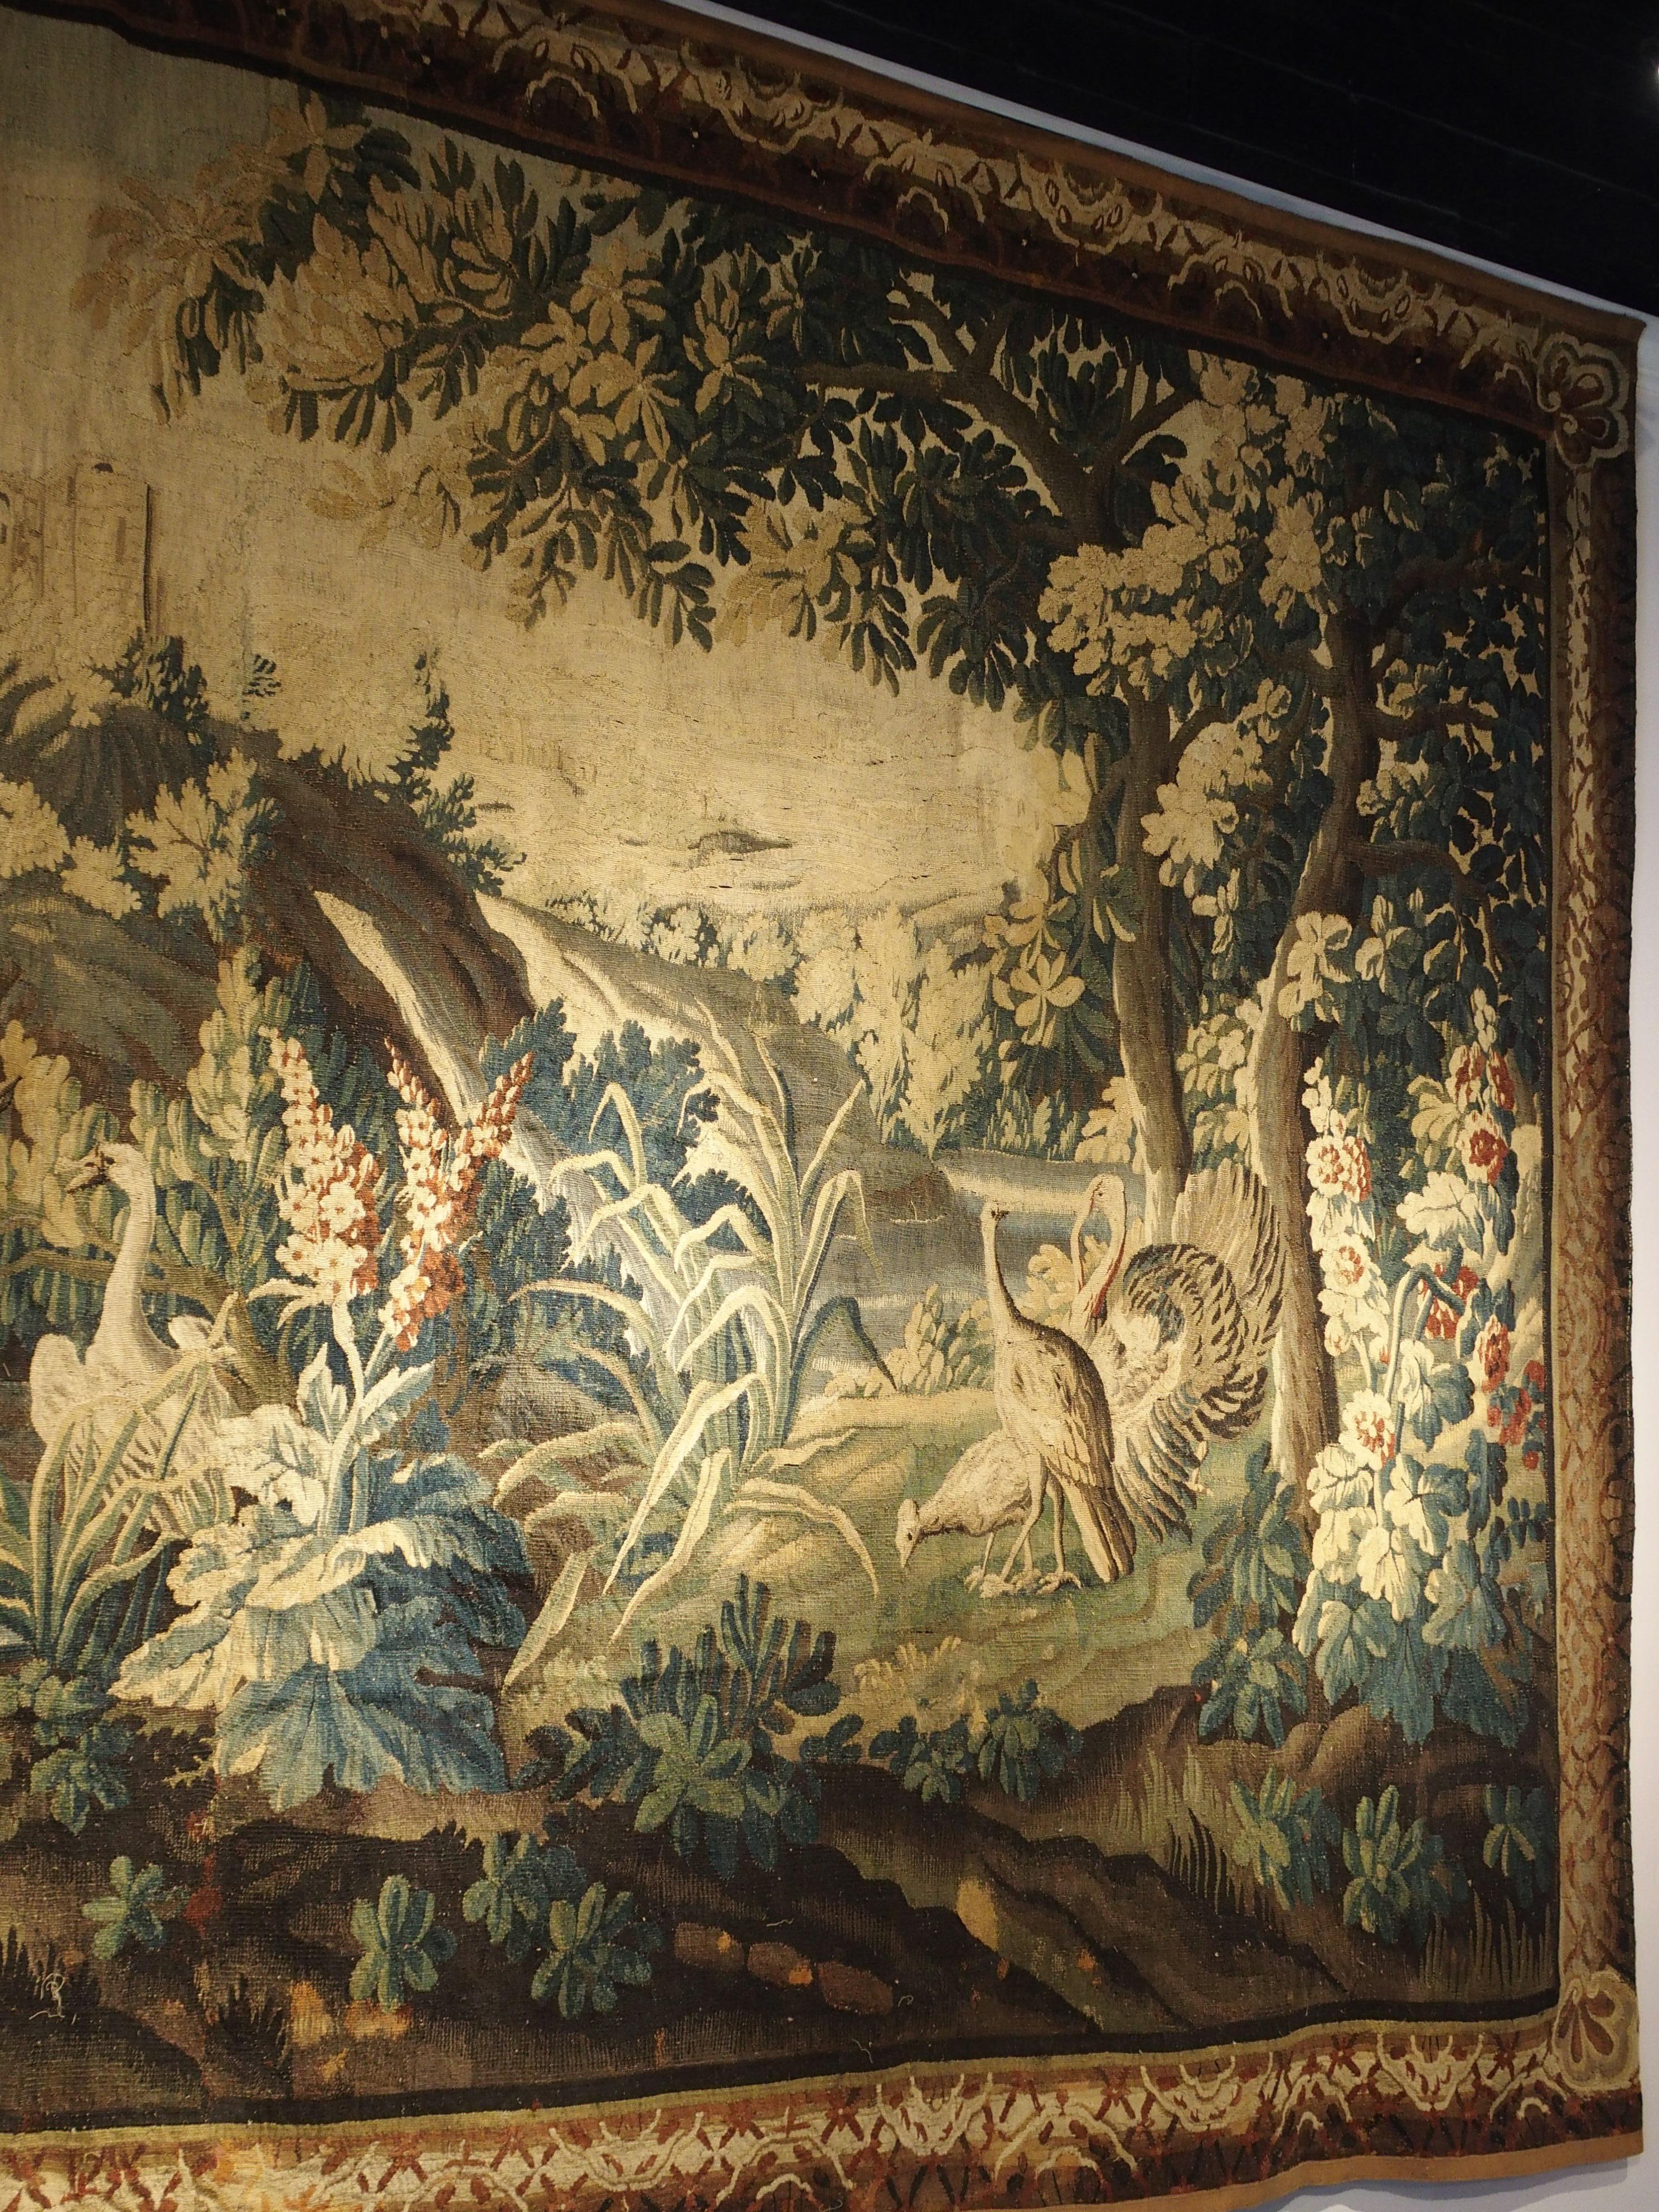 Large 18th Century Wool and Silk Verdure Landscape Tapestry from Flanders (18. Jahrhundert und früher)